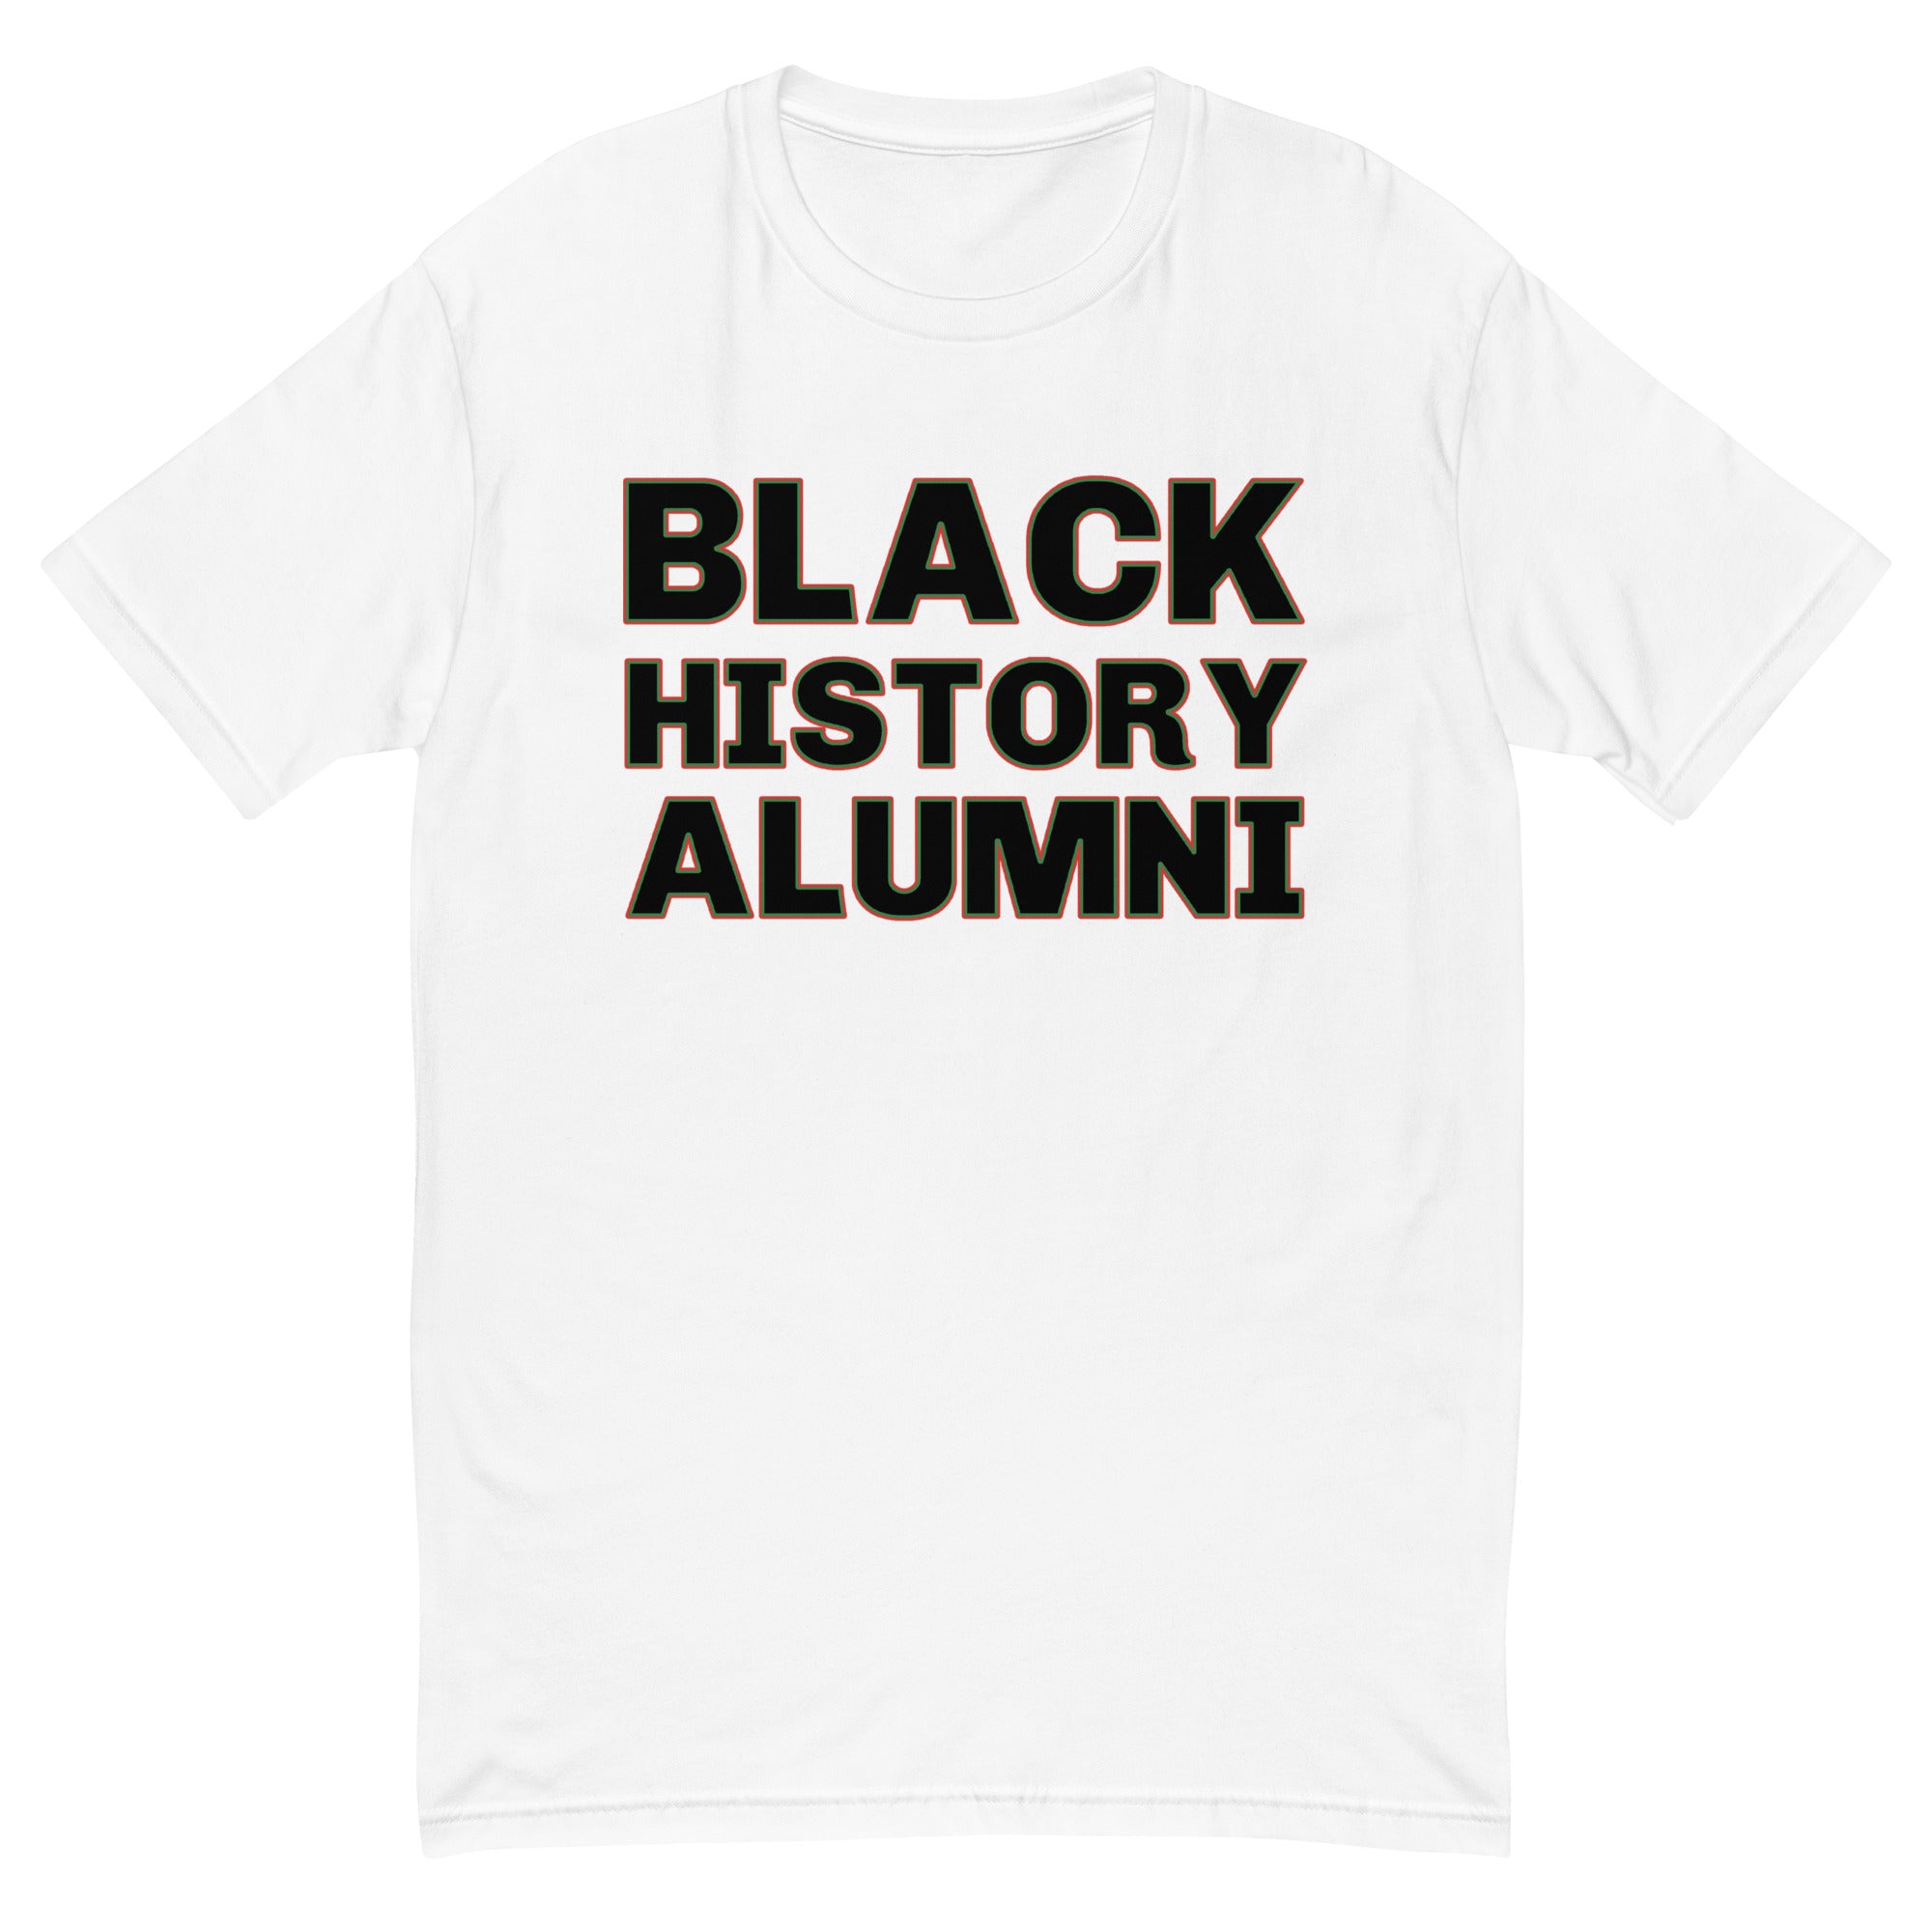 Black History Alumni Short Sleeve Unisex T-Shirt | White